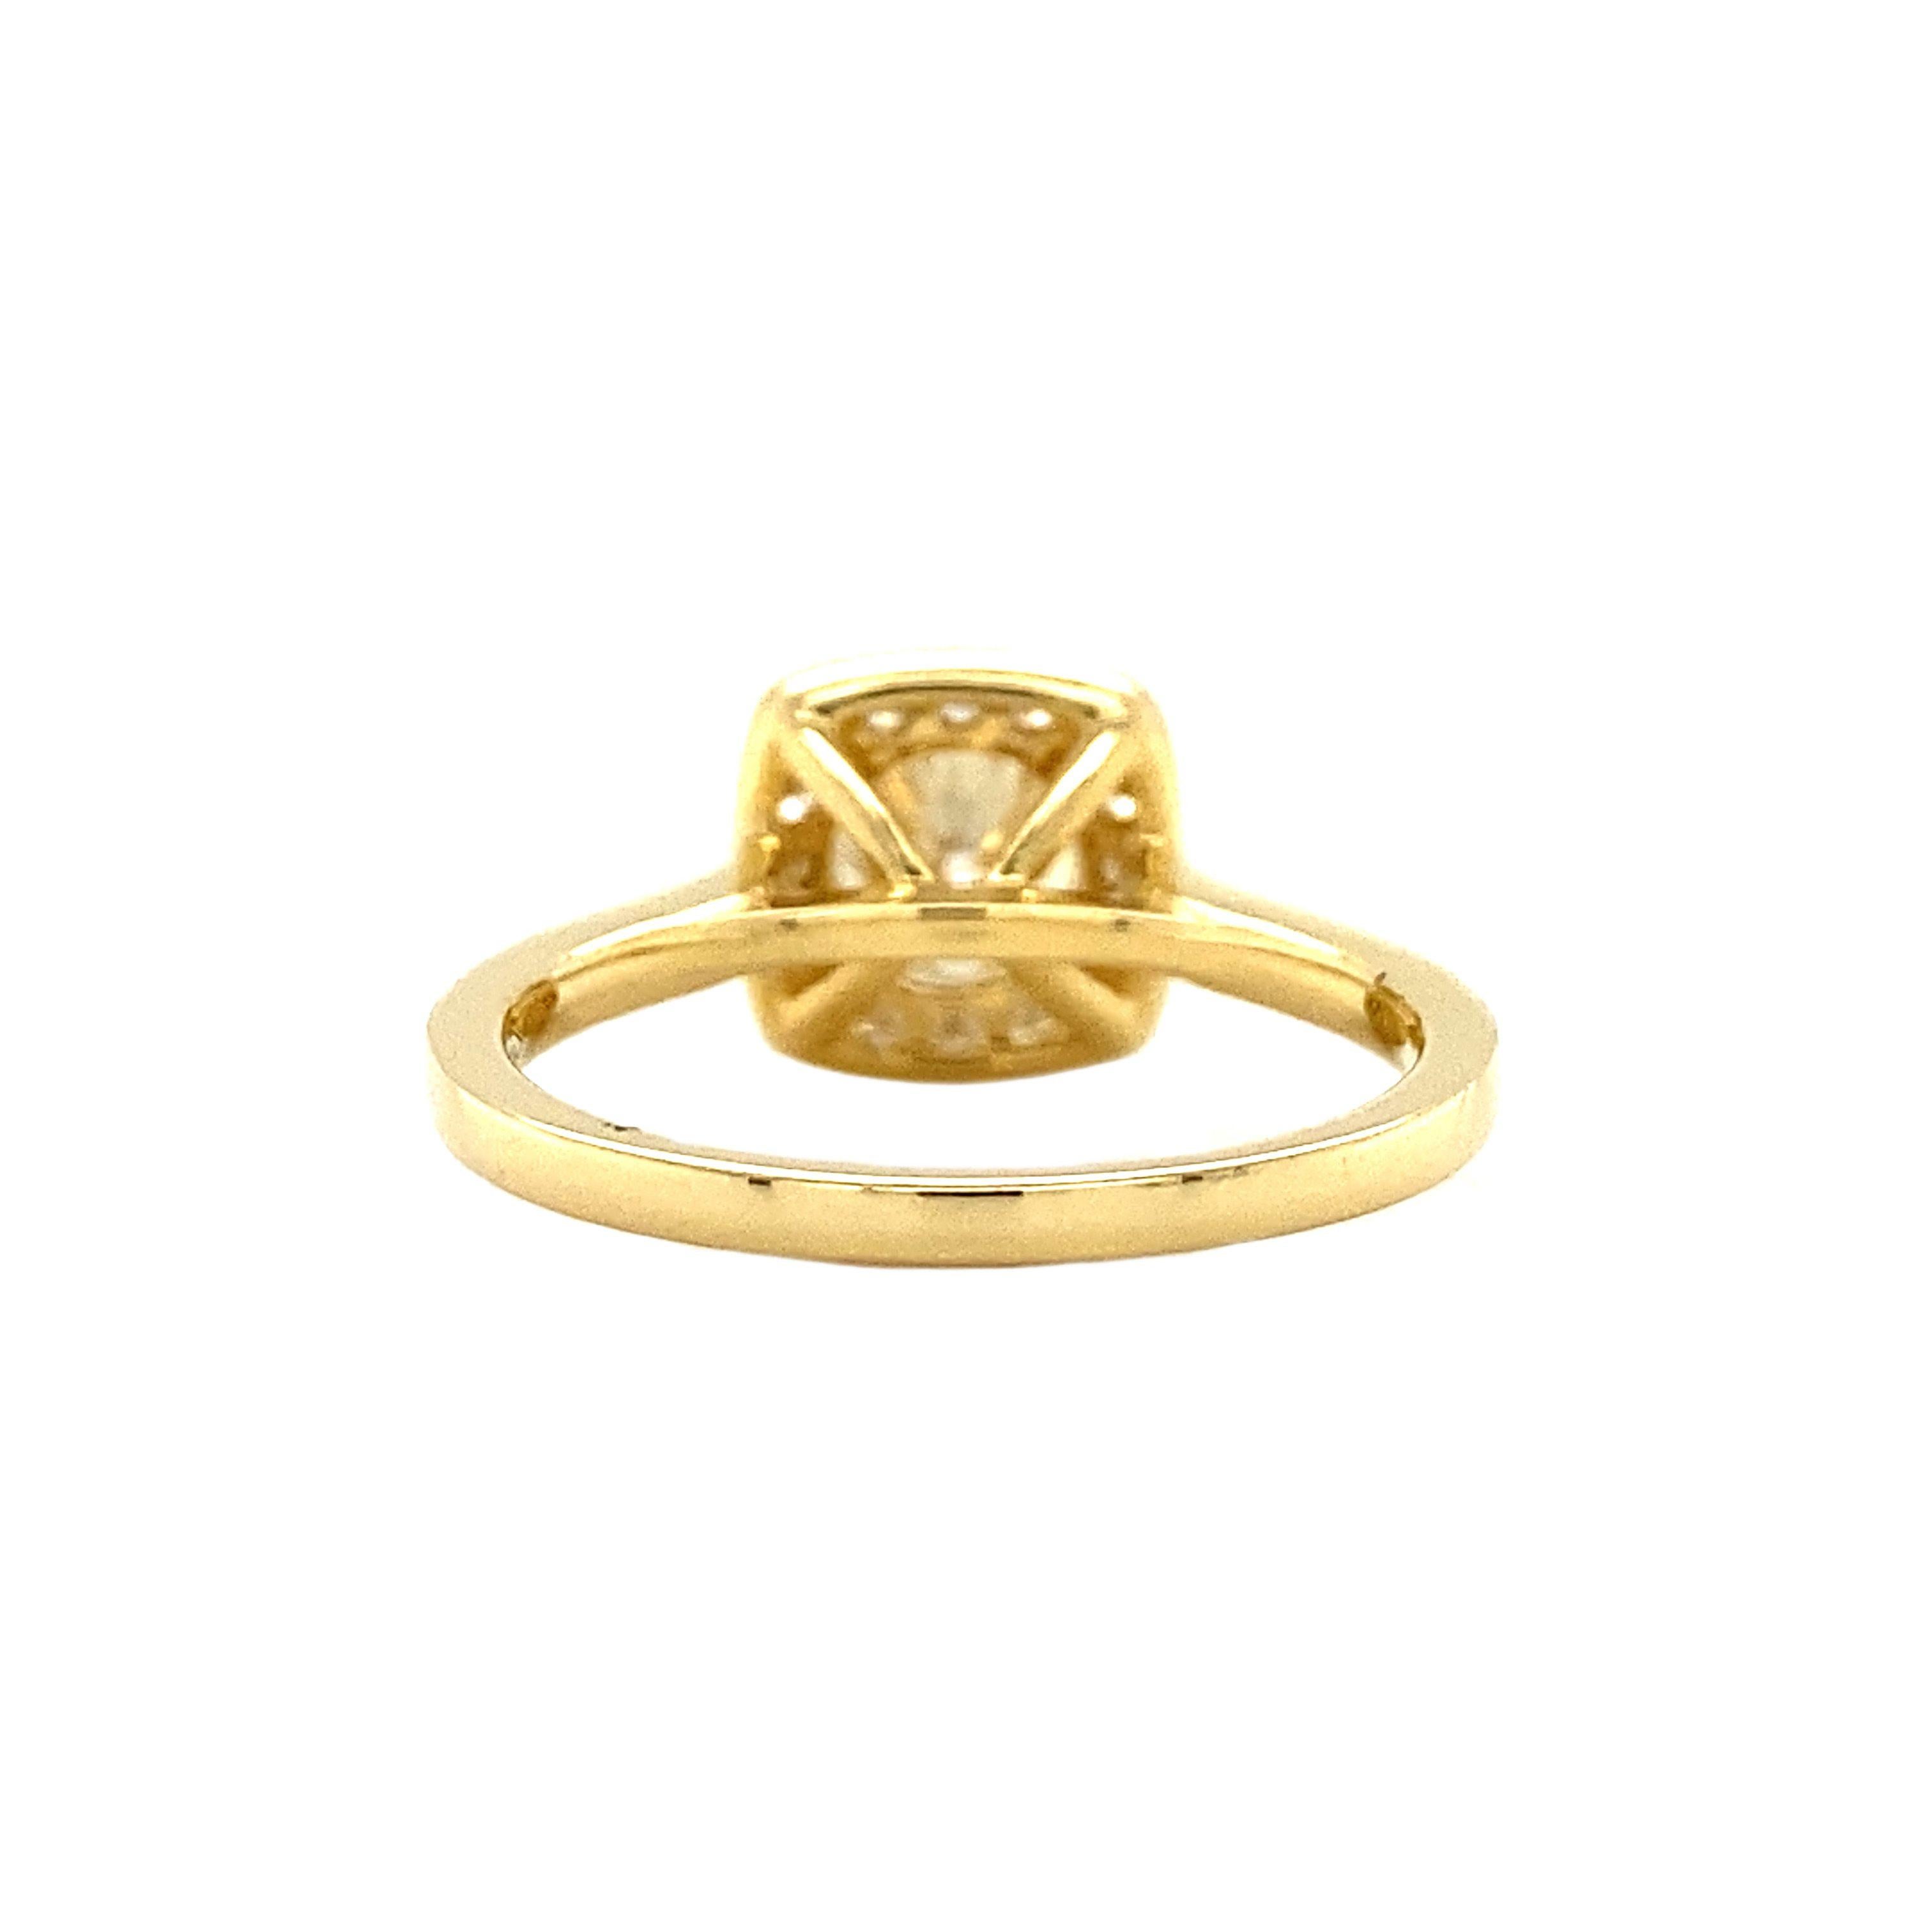 Brilliant Cut 1.01 Carat Diamond Gold Engagement Ring For Sale